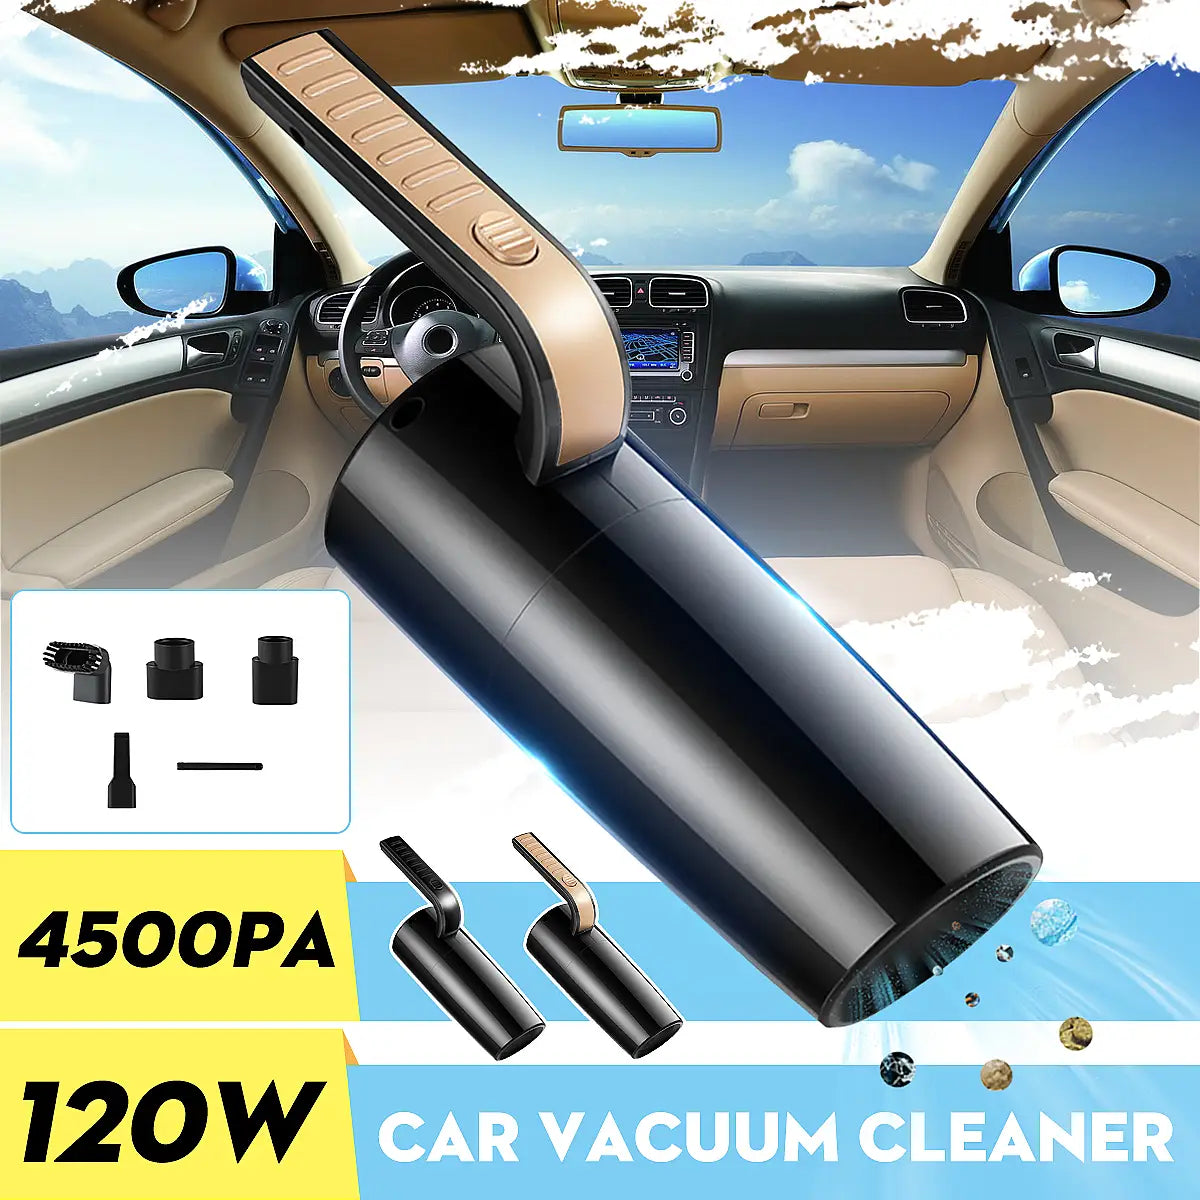 120w Portable Handheld Car Vacuum Cleaner 4500pa Powerful